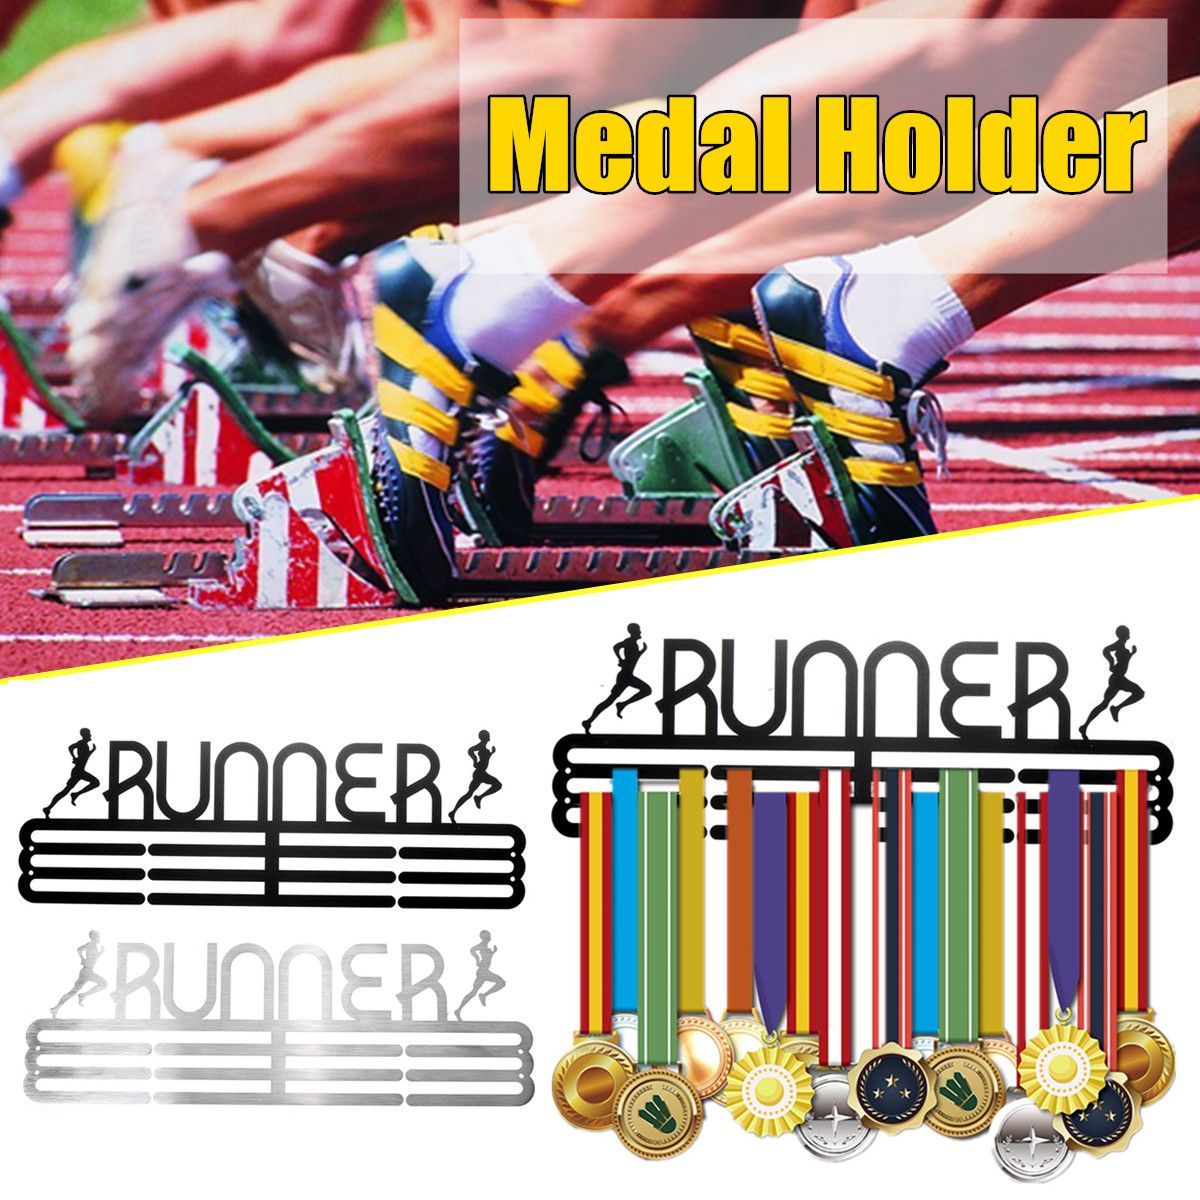 Personalised-Runner-Medal-Hanger-Medal-Holder-Sport-Running-Medals-Rack-Home-Decorations-1600221